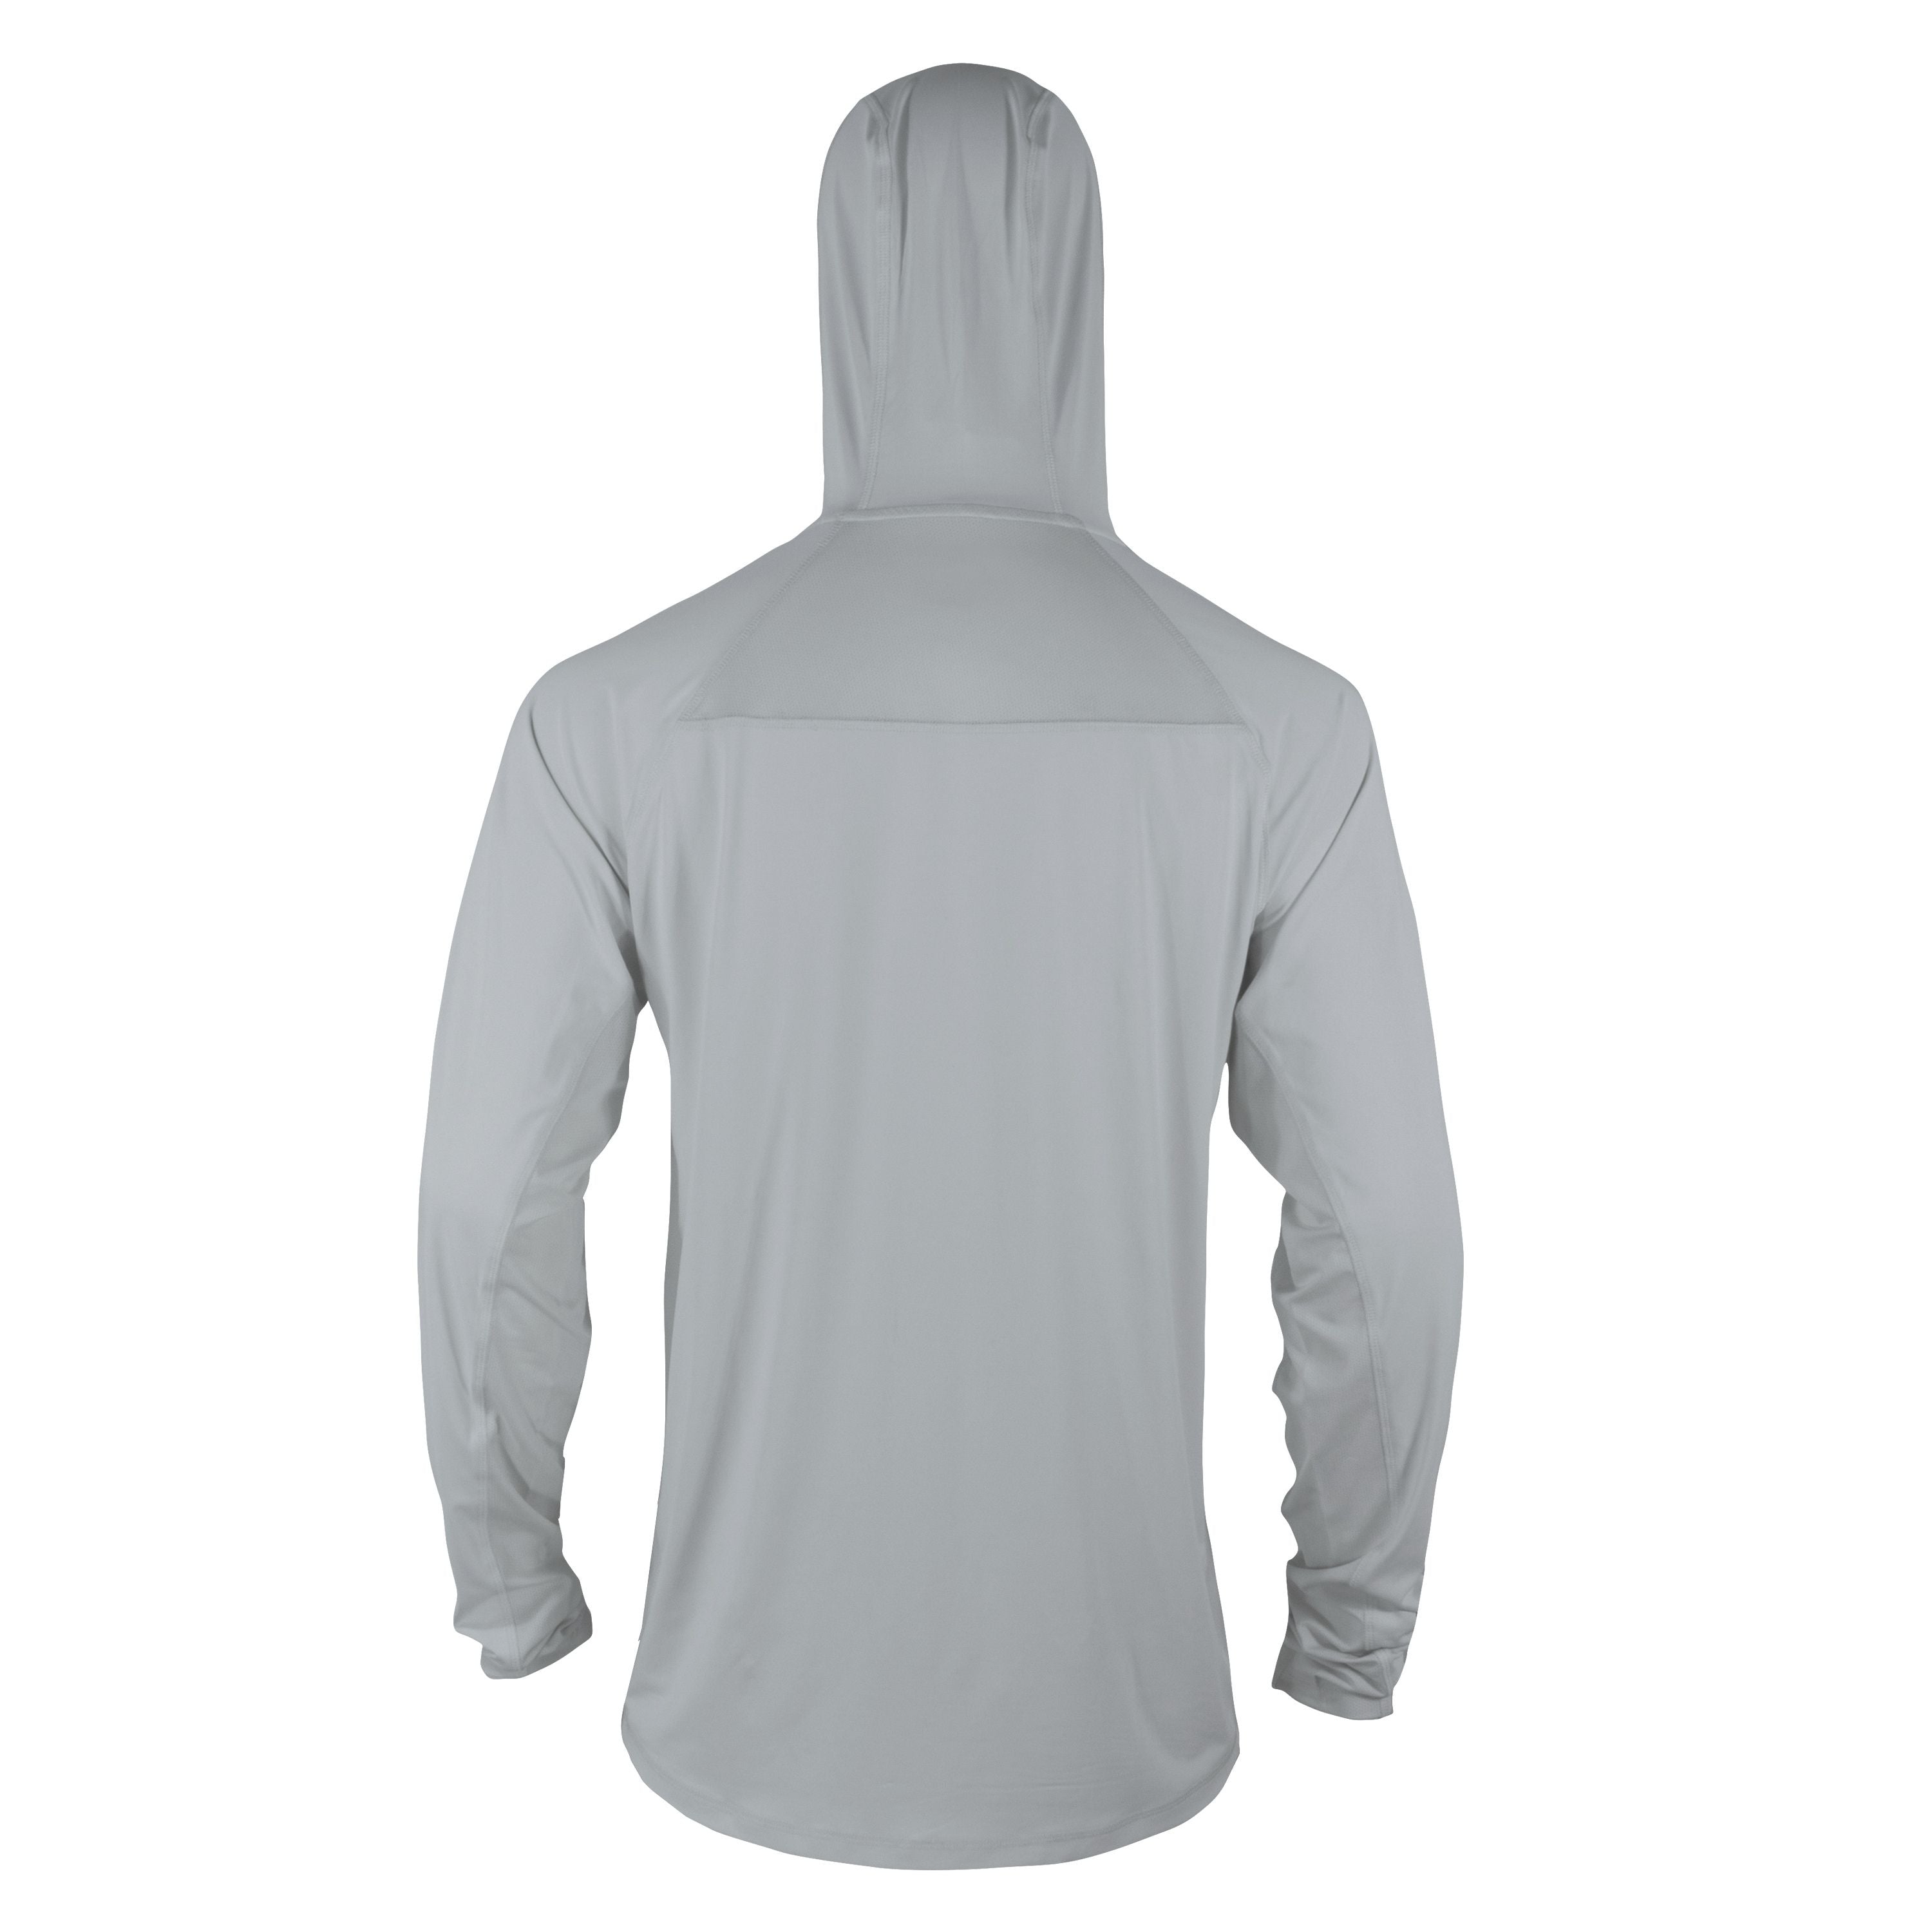 T-shirt manches longues à capuchon - Homme||Long sleeves t-shirt with hood - Men's